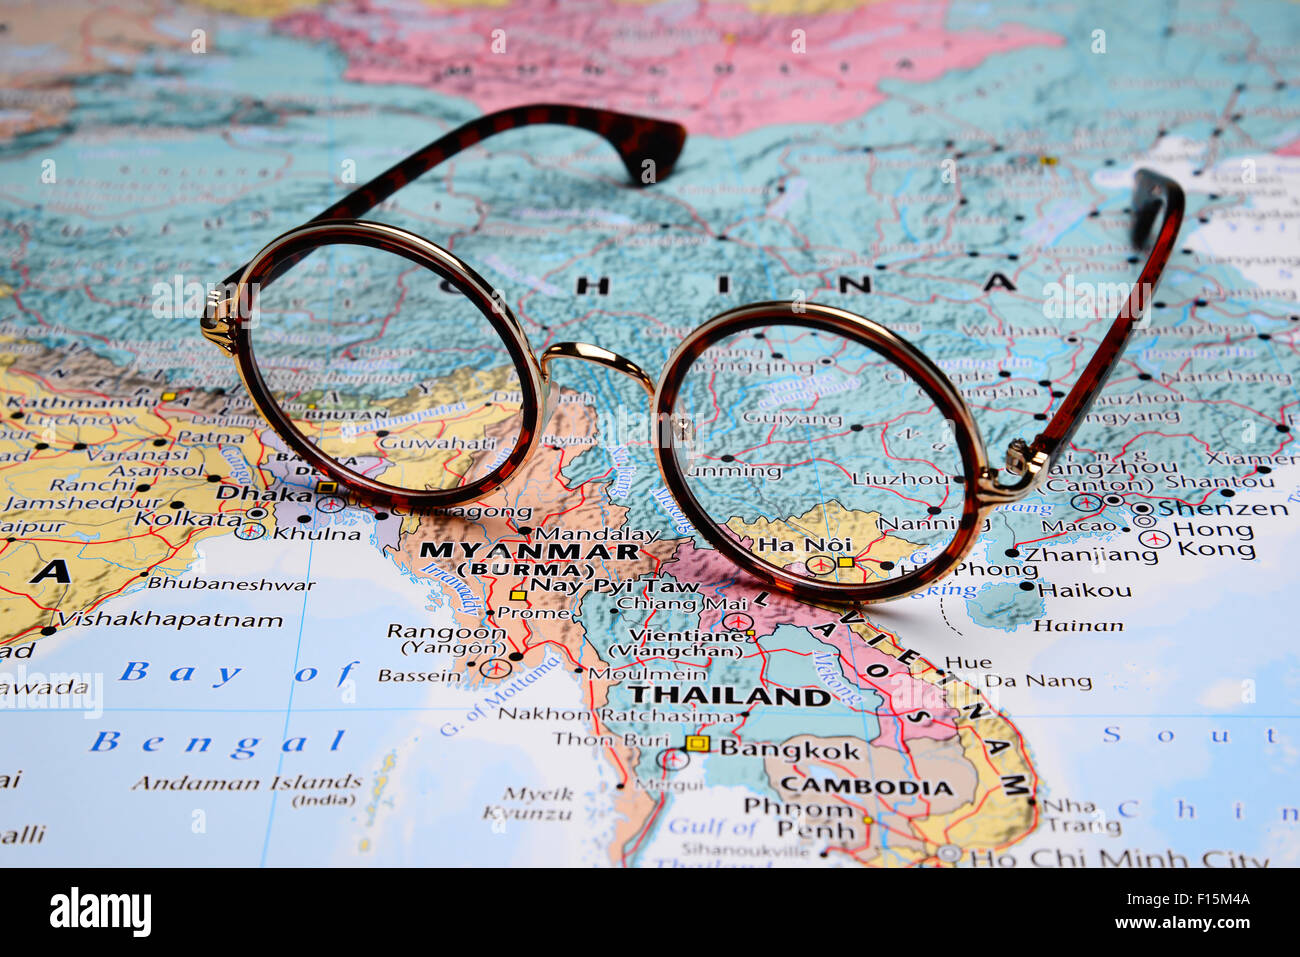 Glasses on a map of Asia - Hanoi Stock Photo - Alamy